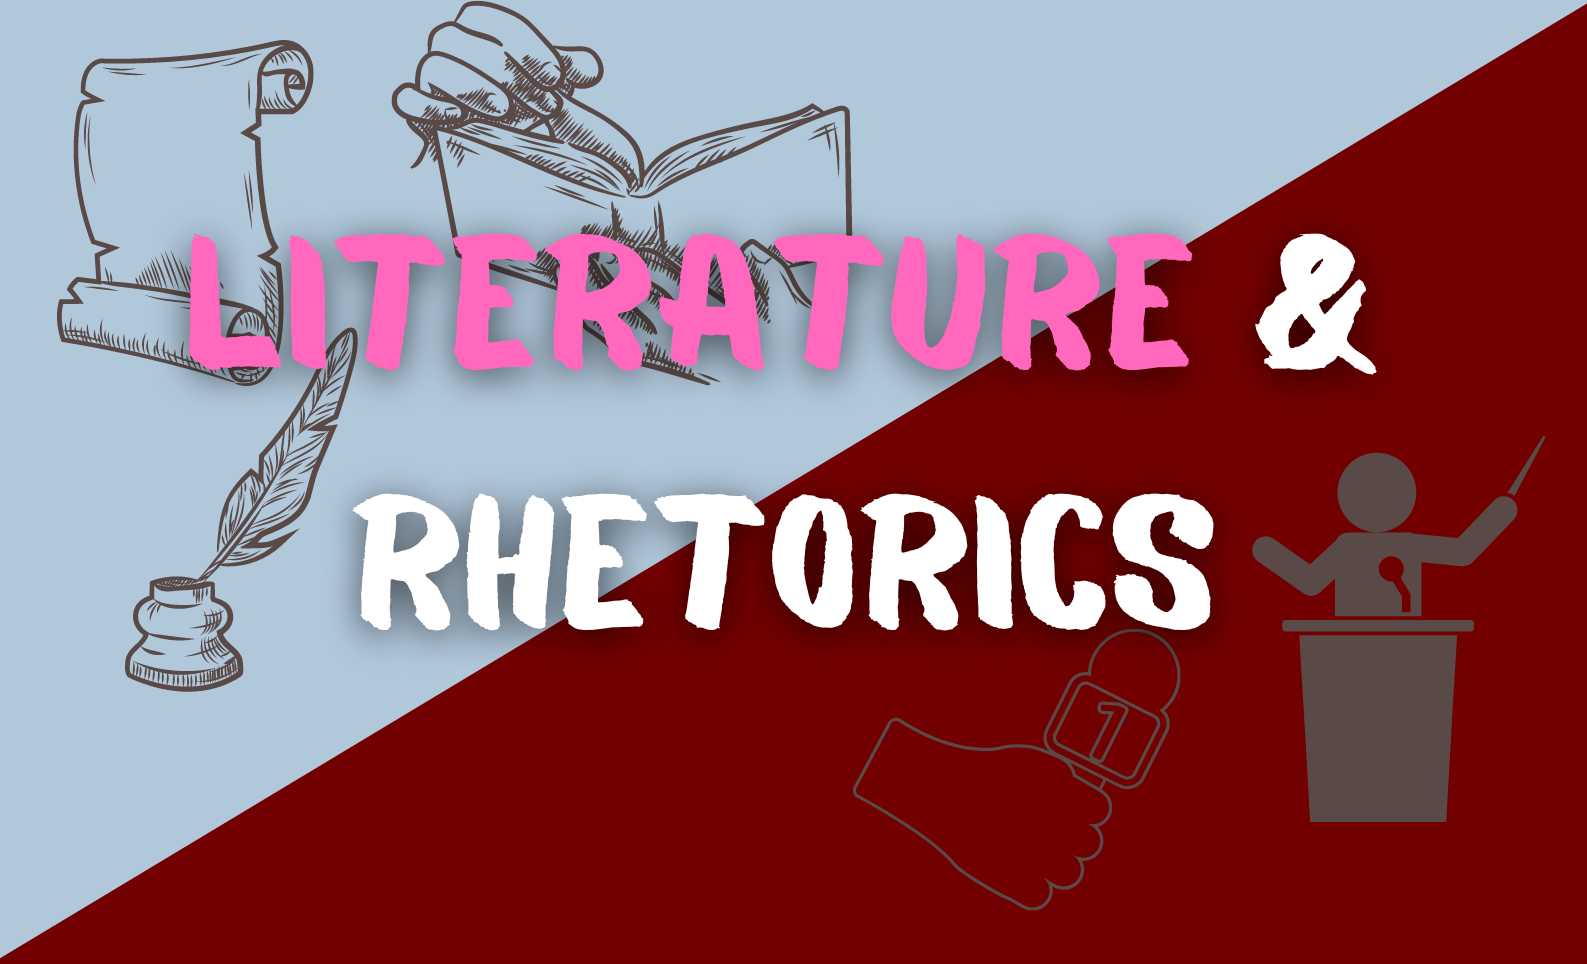 					View Literature & Rhetorics
				